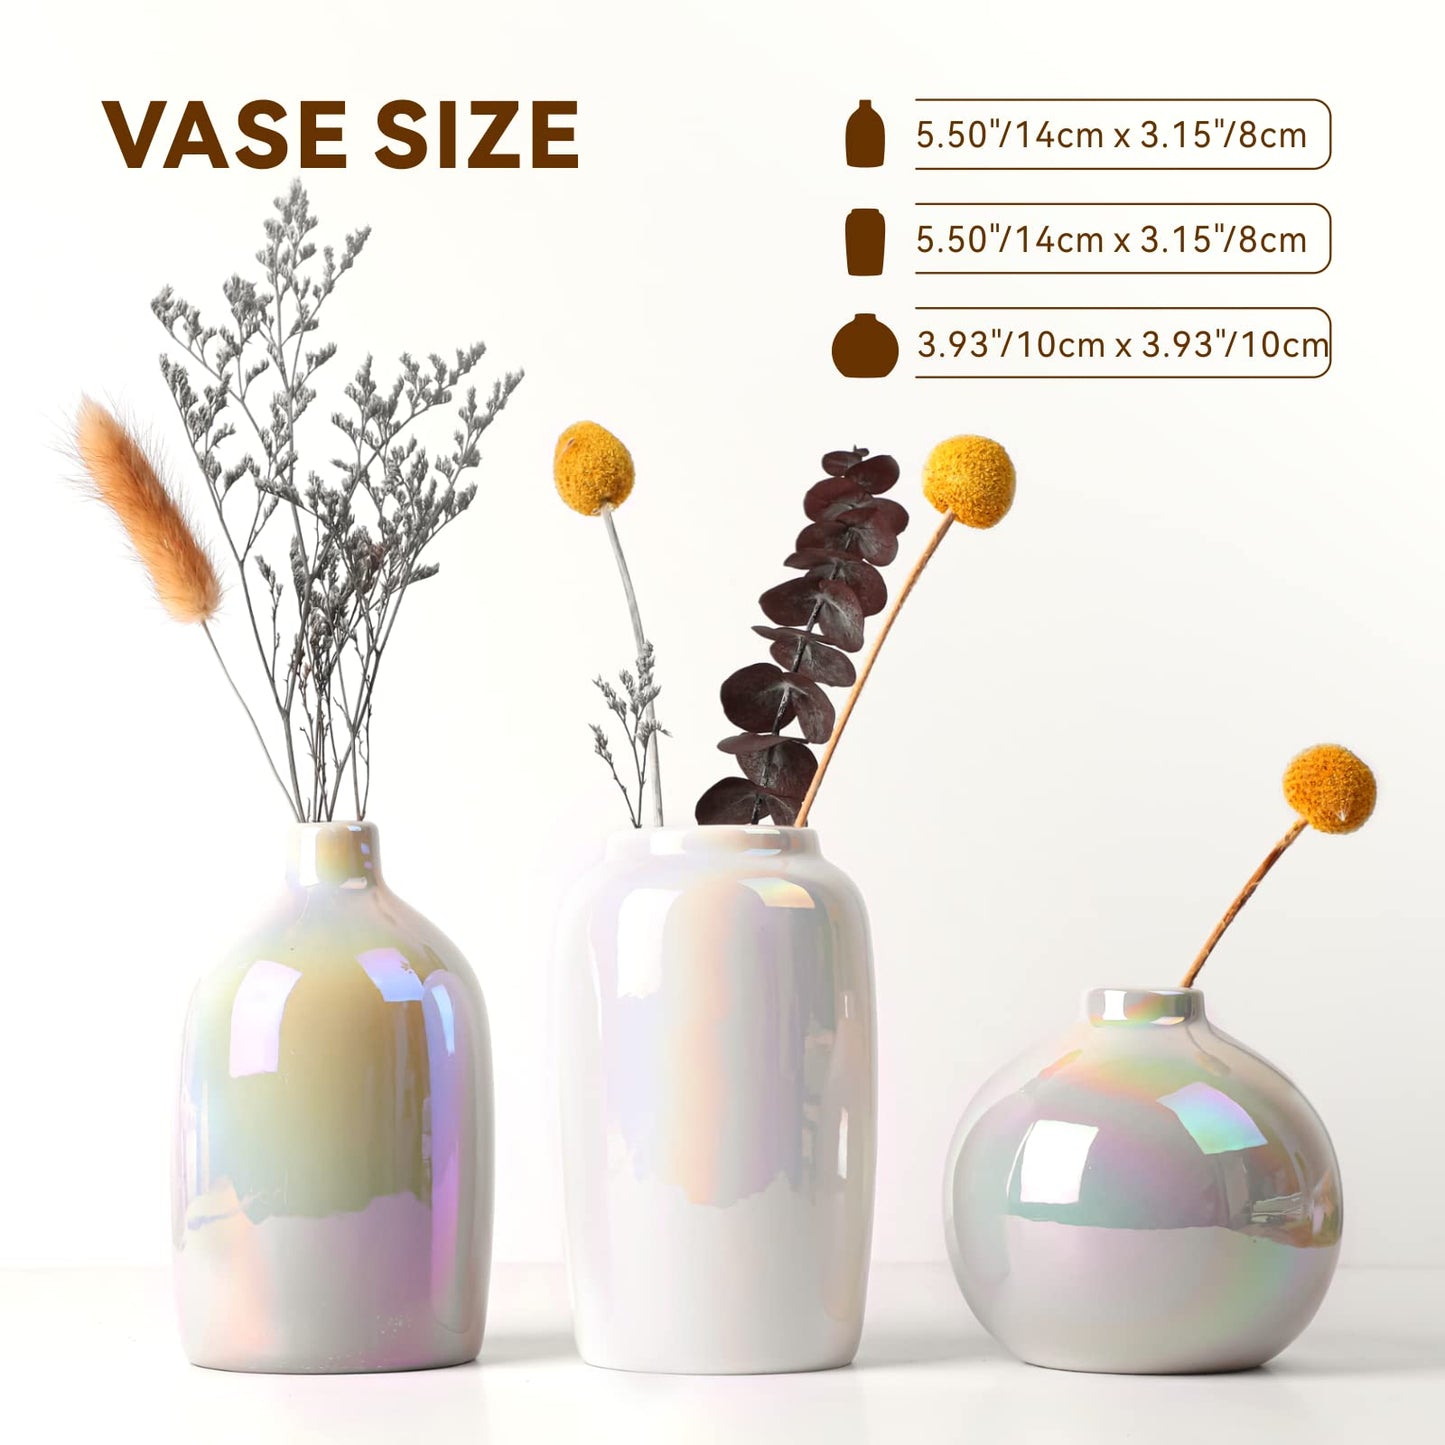 Baytion Ceramic Vase, Shell Color Flower Vases for Artificial Dried Flowers & Pampas Grasses,Ceramic Flower Vase Decor for Home, Living Room,Office Table,Bookshelf, Mantel & Entryway (L)